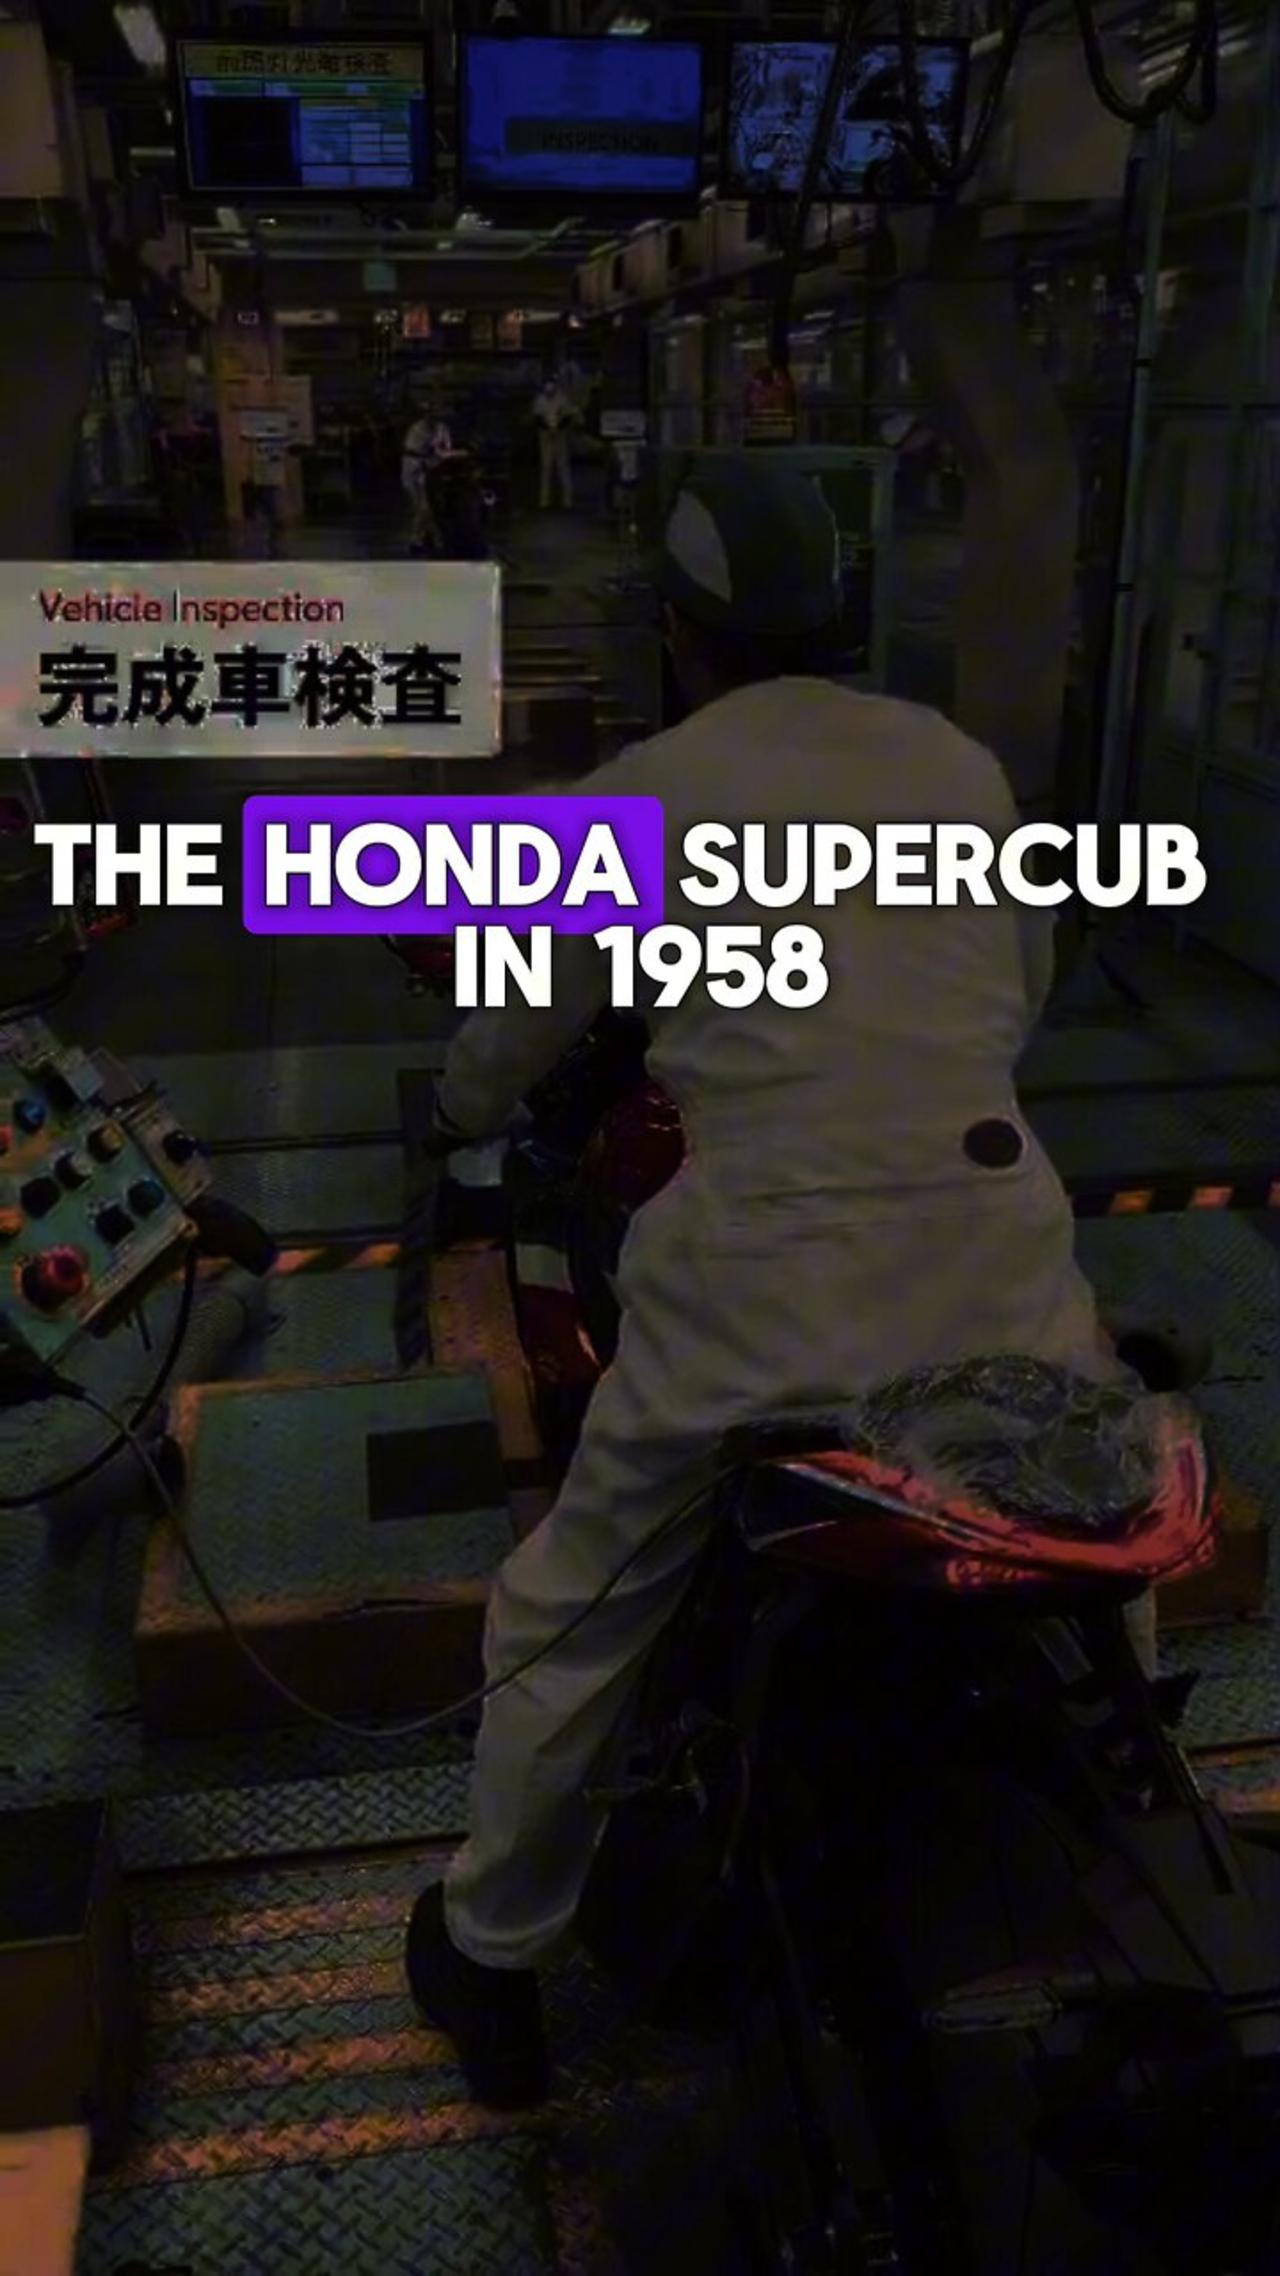 Honda history part 2